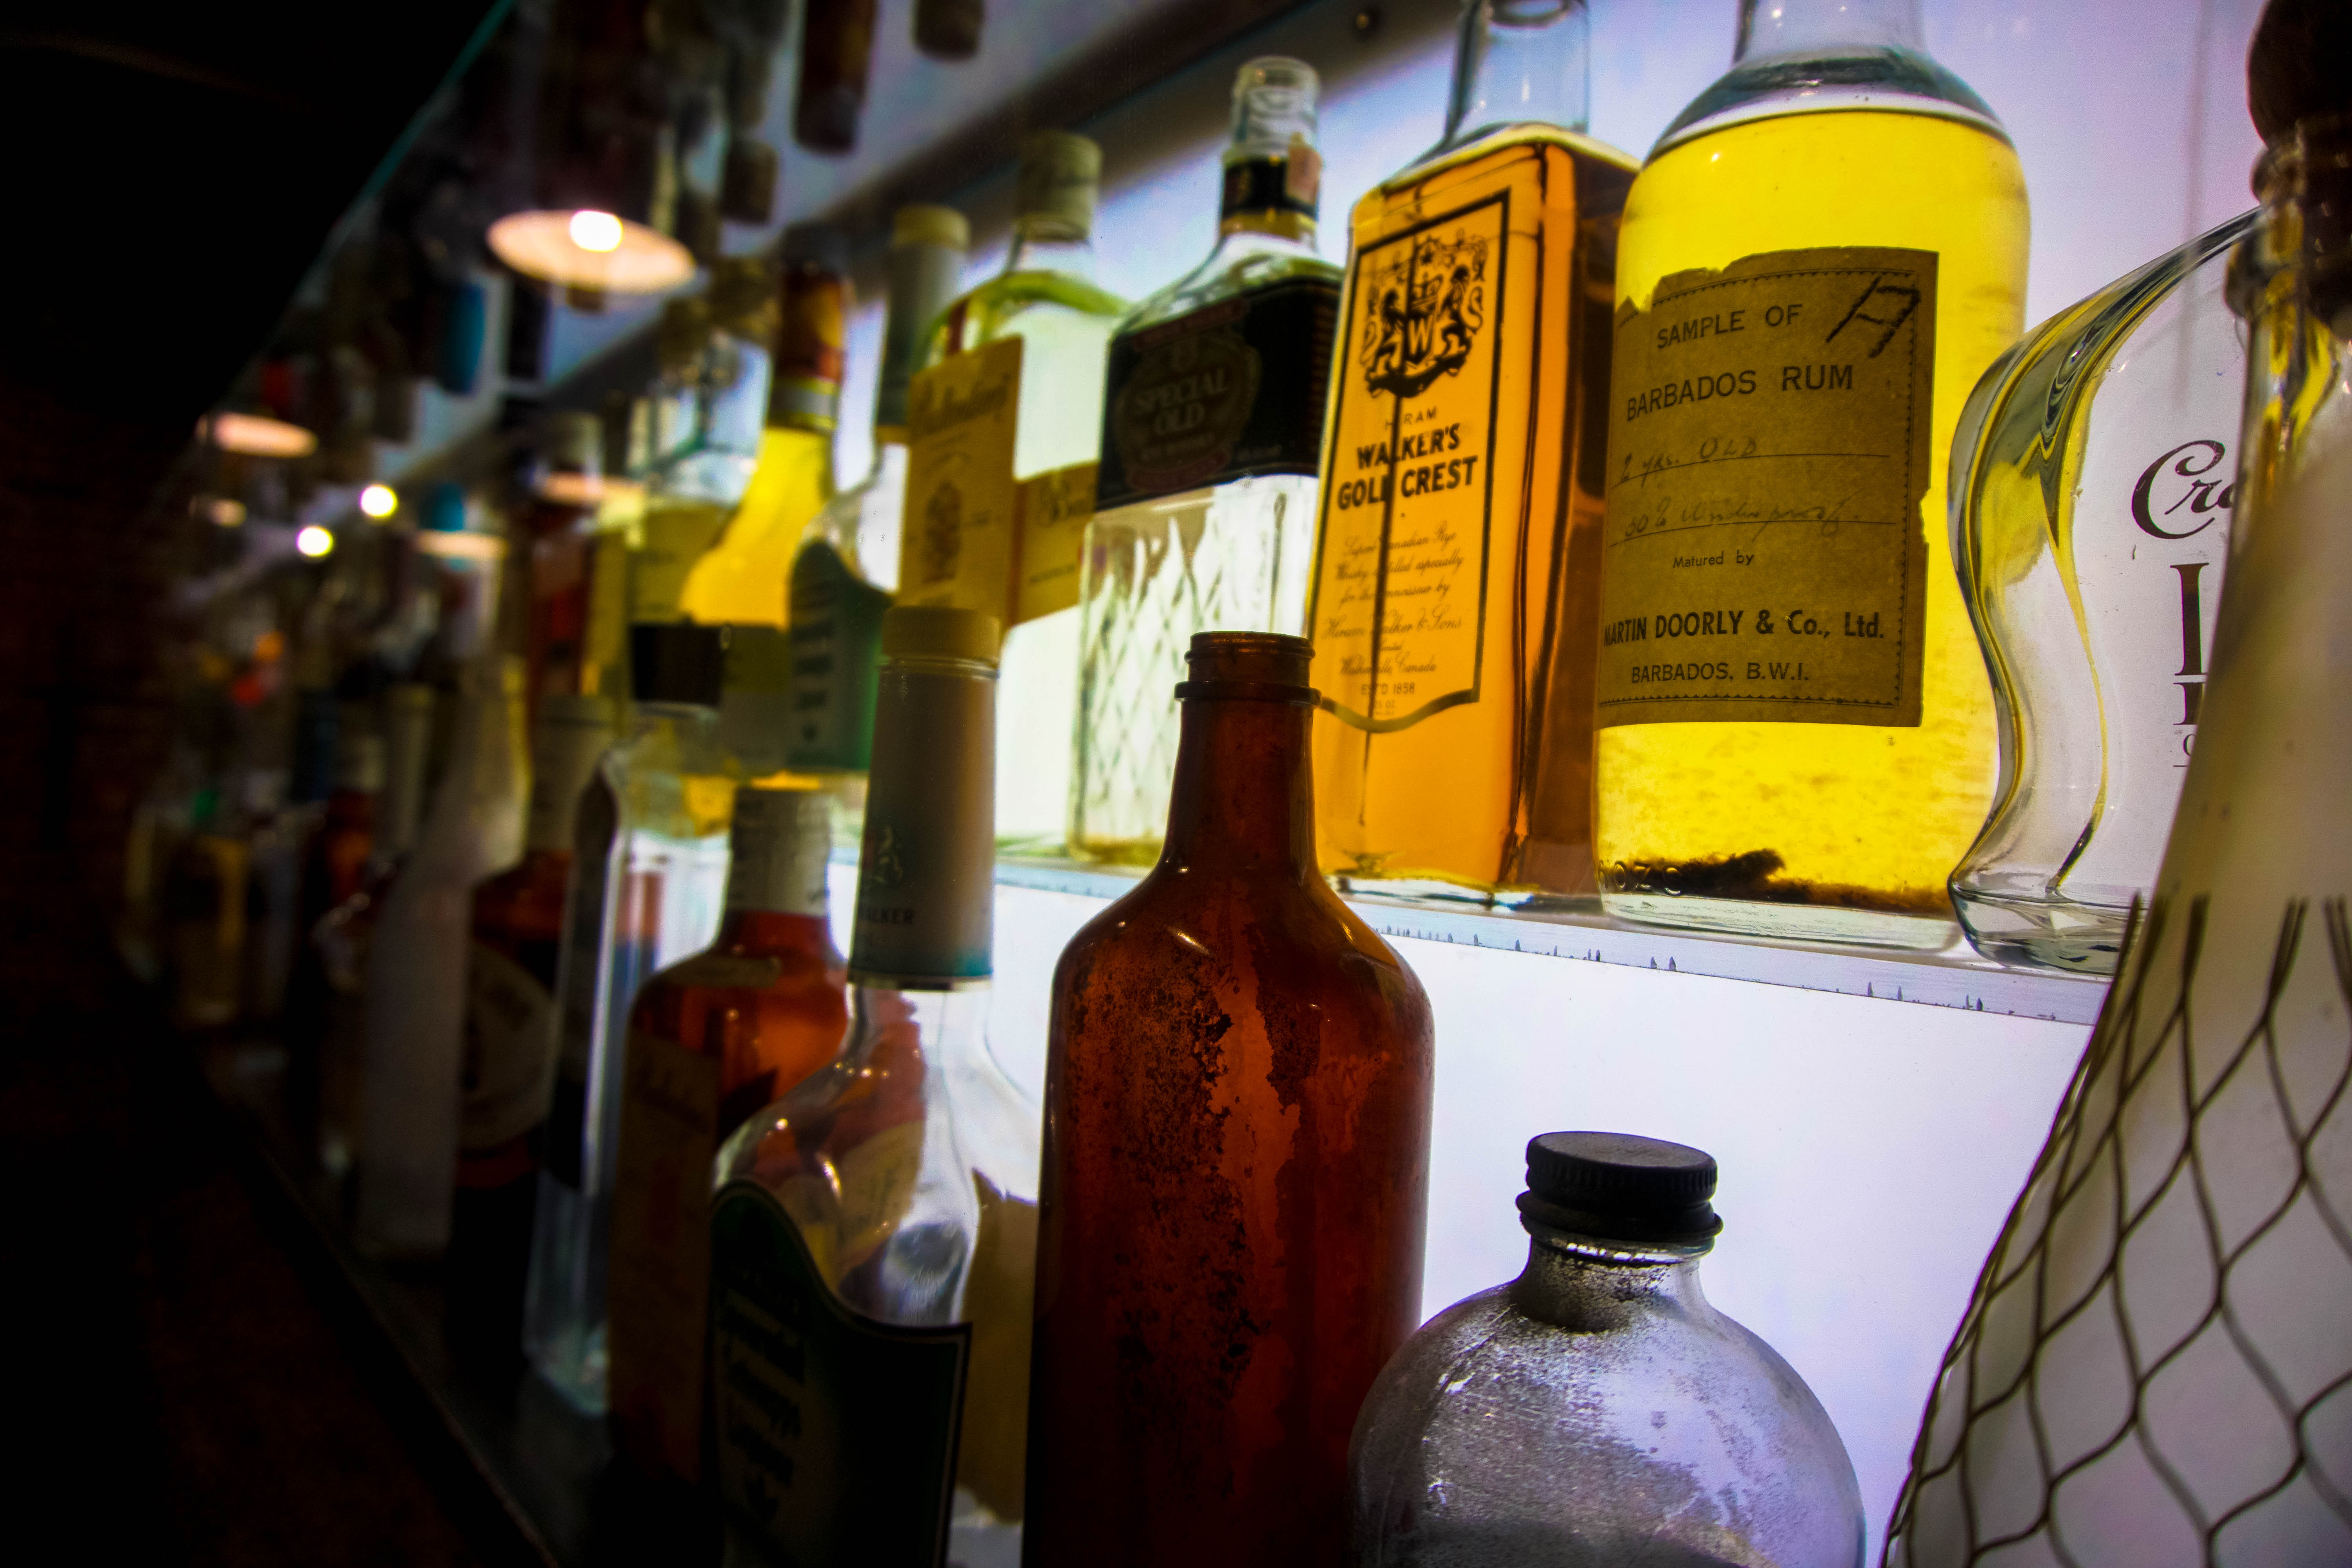 Old bottles displayed at the distillery 